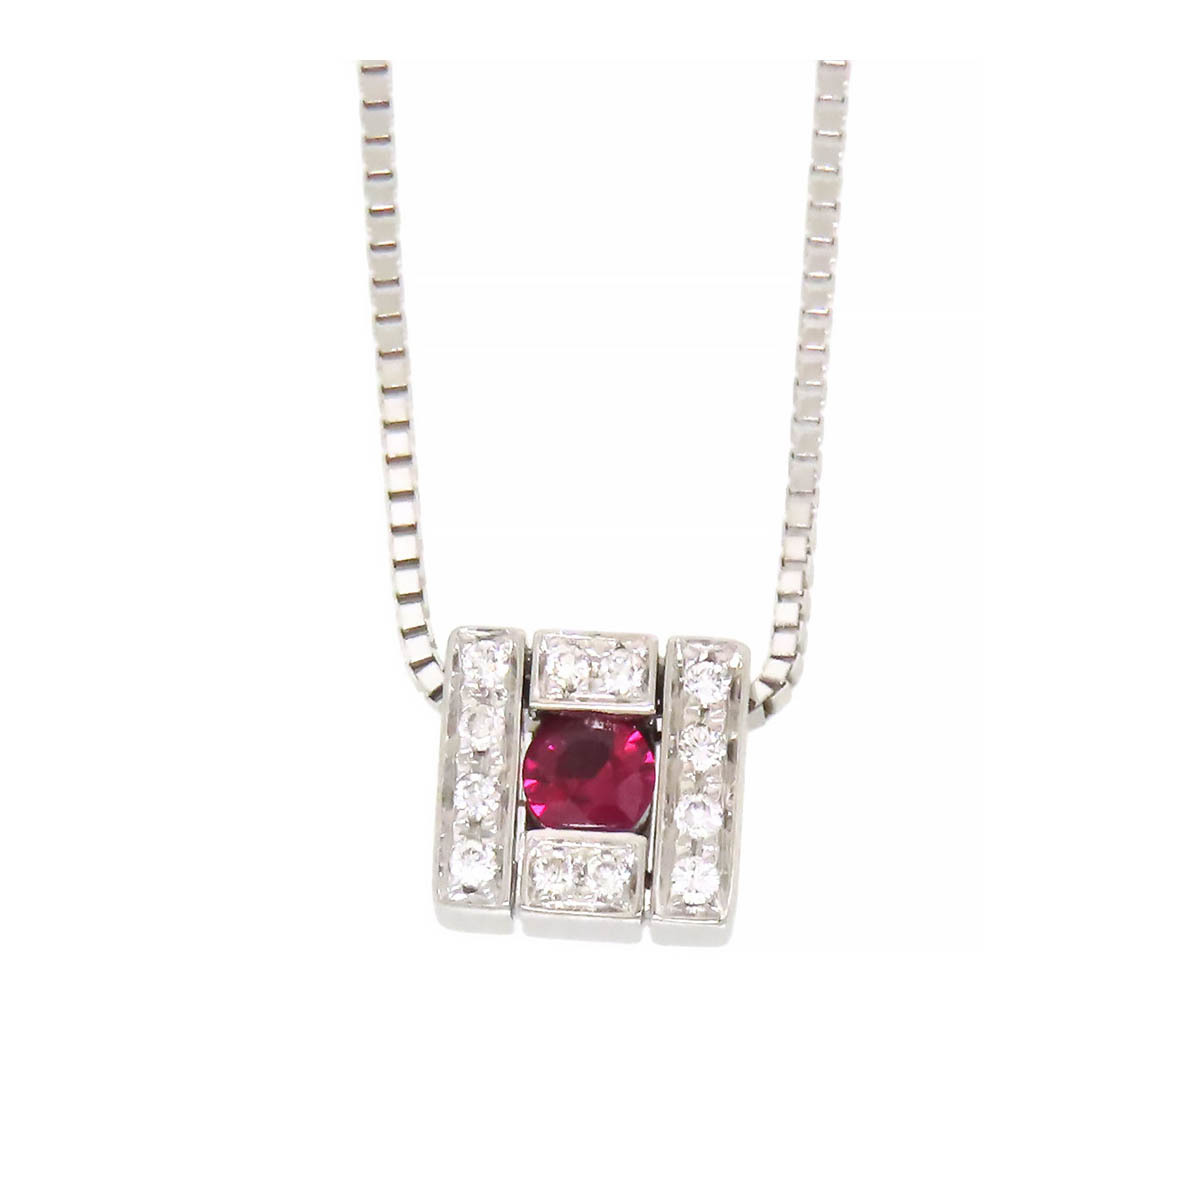  Damiani bell Epo k square ruby diamond necklace 20019093 750 (K18WG) unisex [ beautiful goods ] used [ jewelry ]